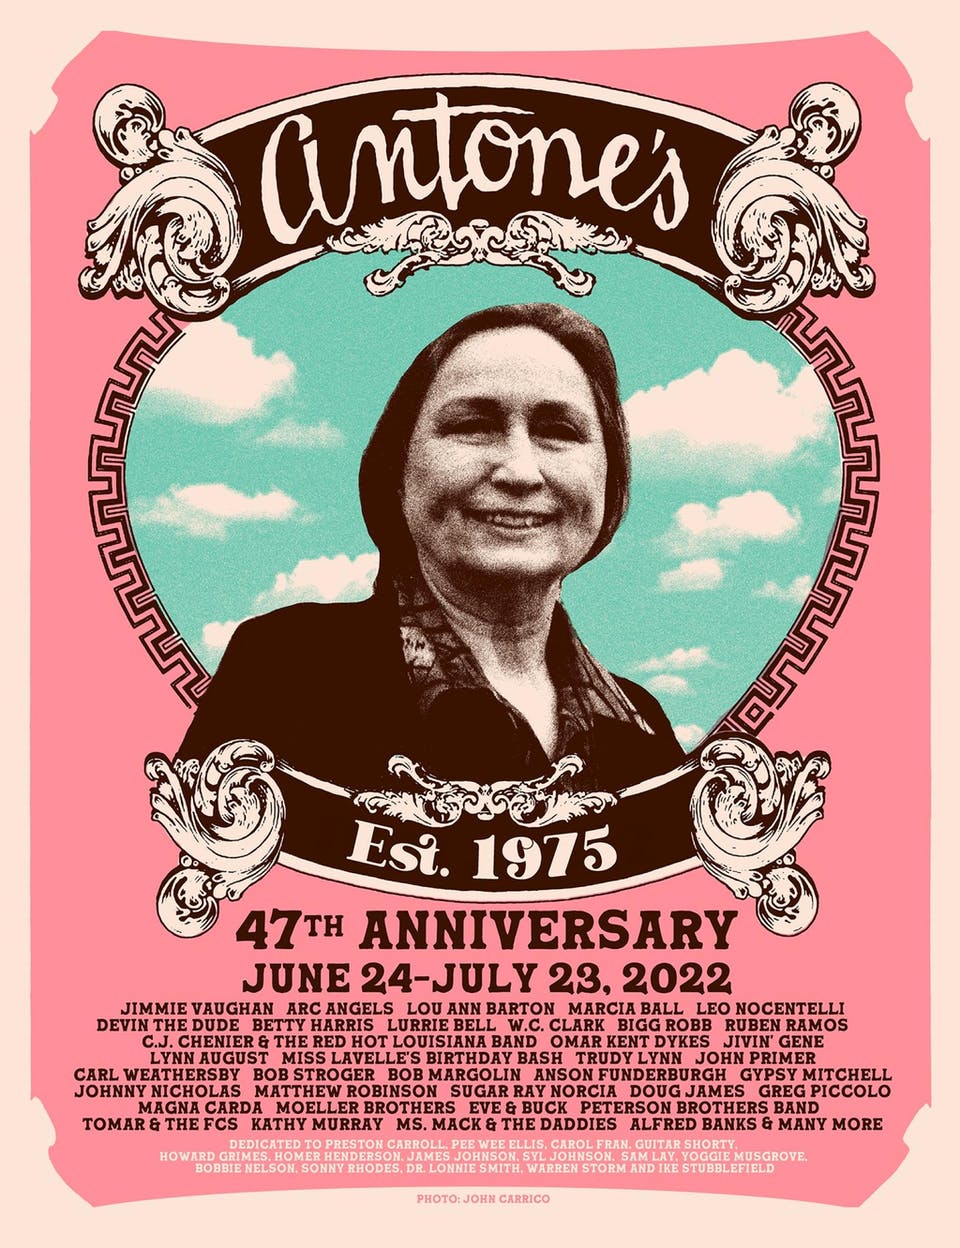 Antone's 47th Anniversary Poster